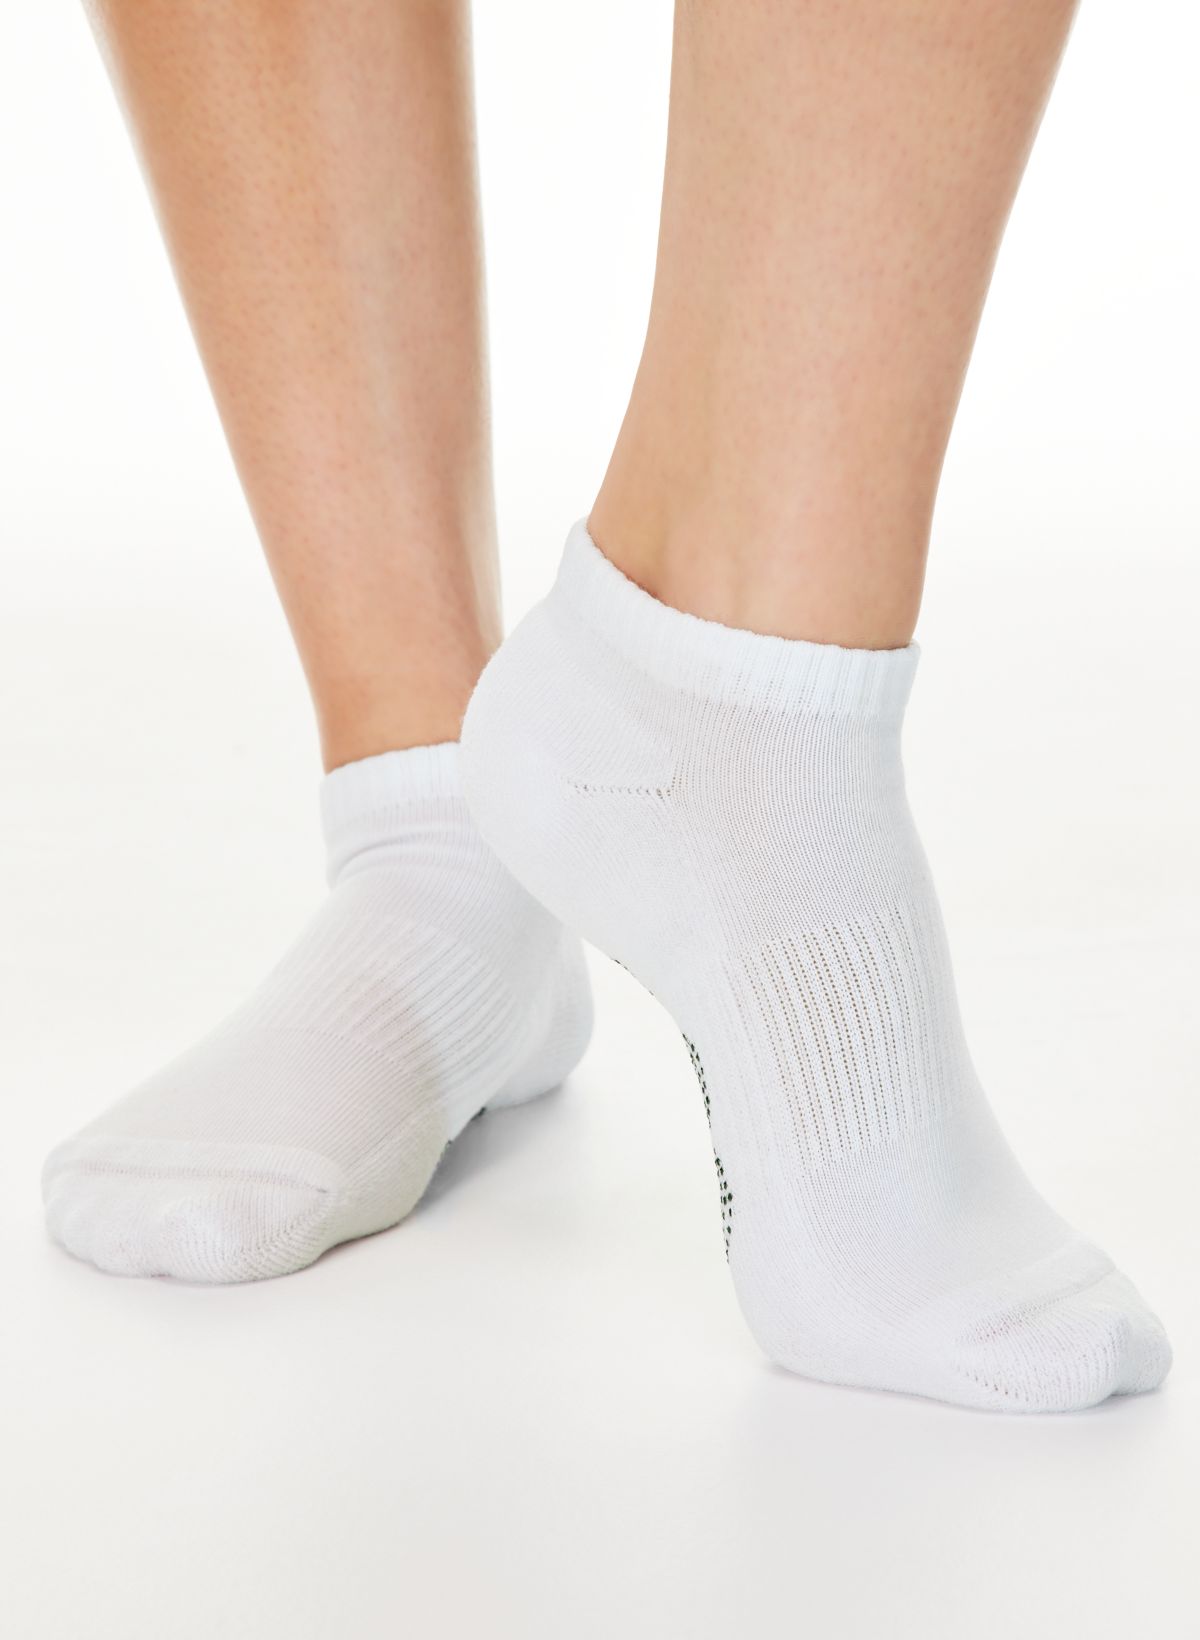 Pilates Socks -  Canada